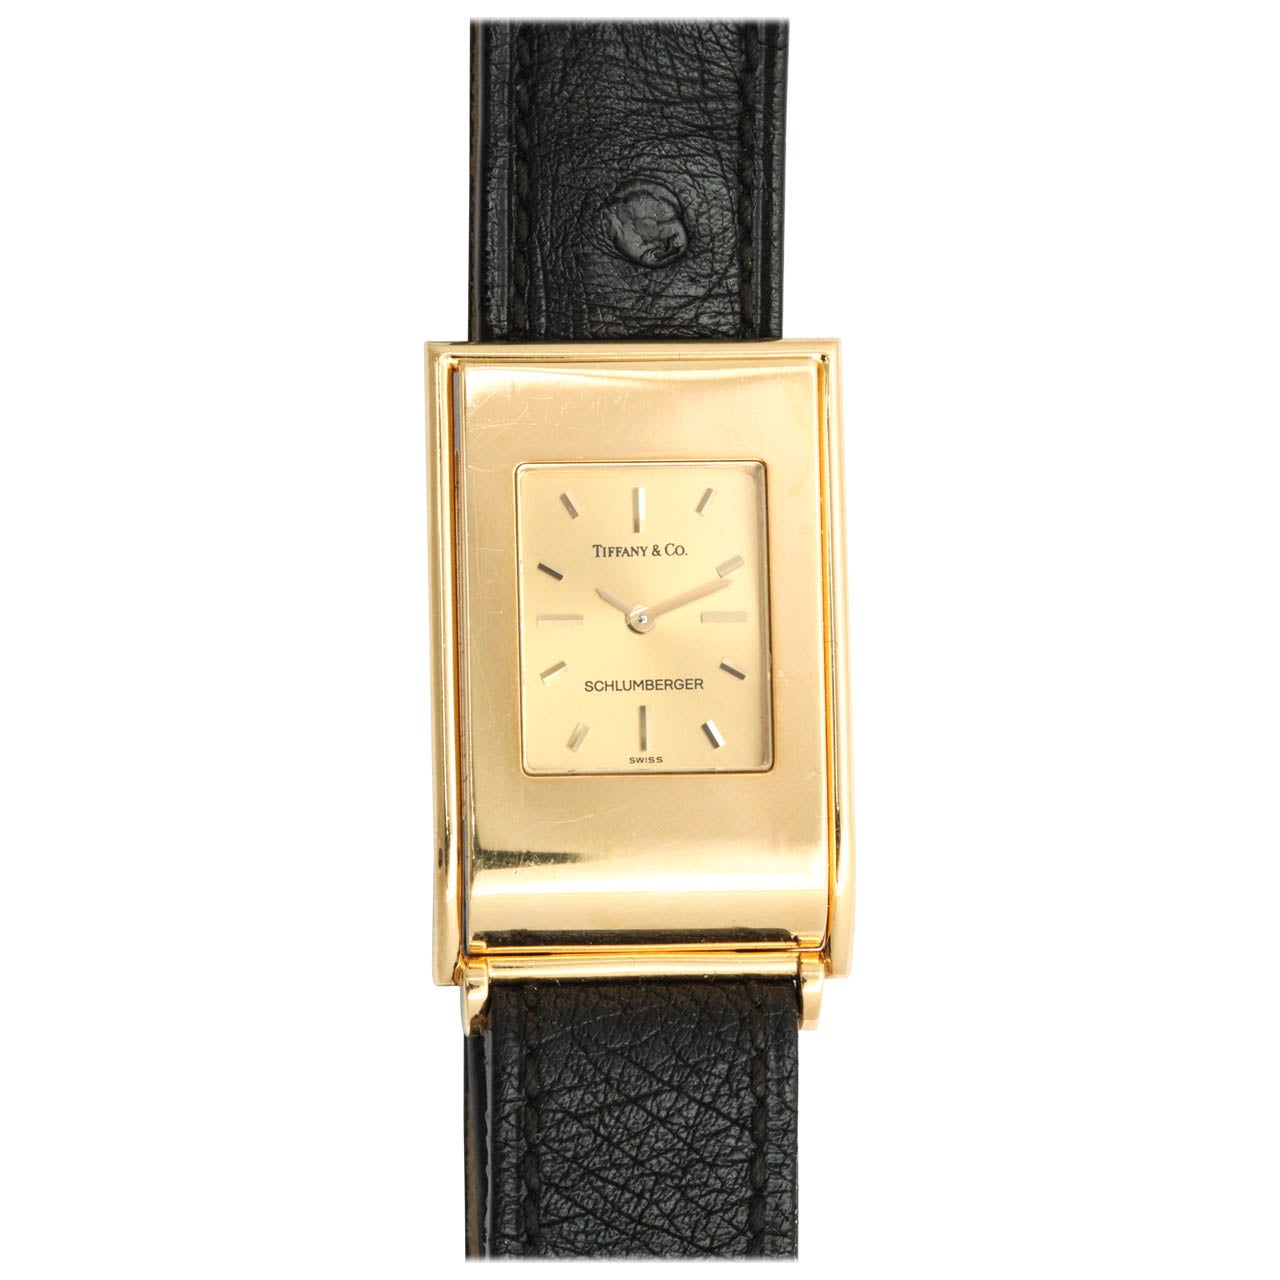 Tiffany & Co. Yellow Gold Rectangular Wristwatch Schlumberger circa 1980s